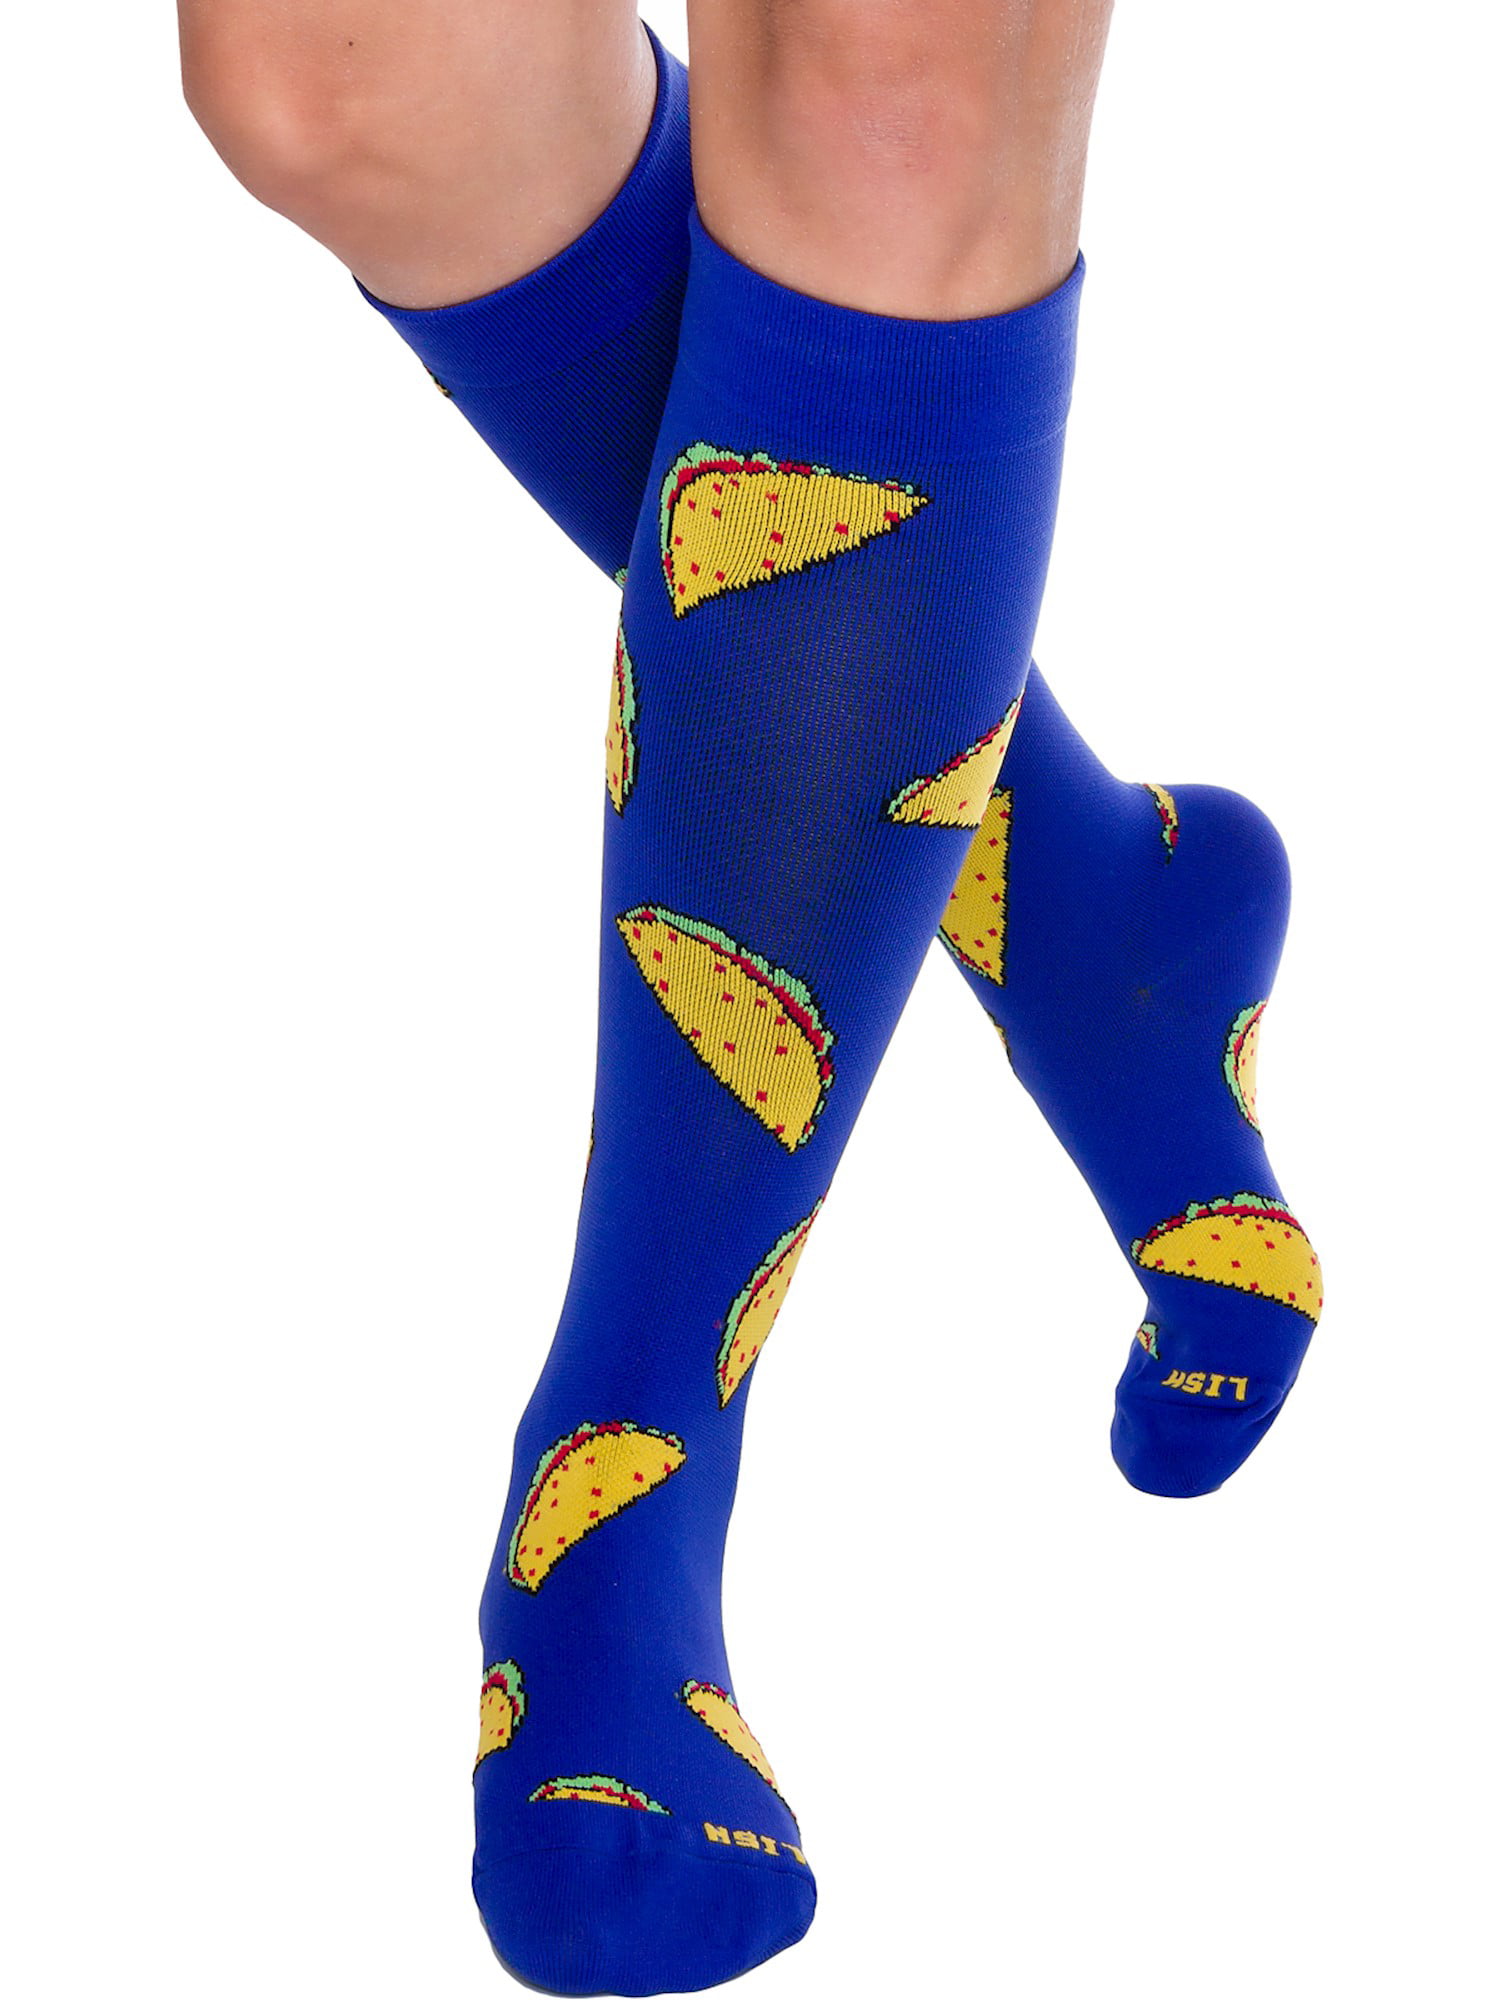 Fun Running Compression Socks LISH Graduated 15-25mmHG Colorful Knee High Sport Socks for Men and Women 